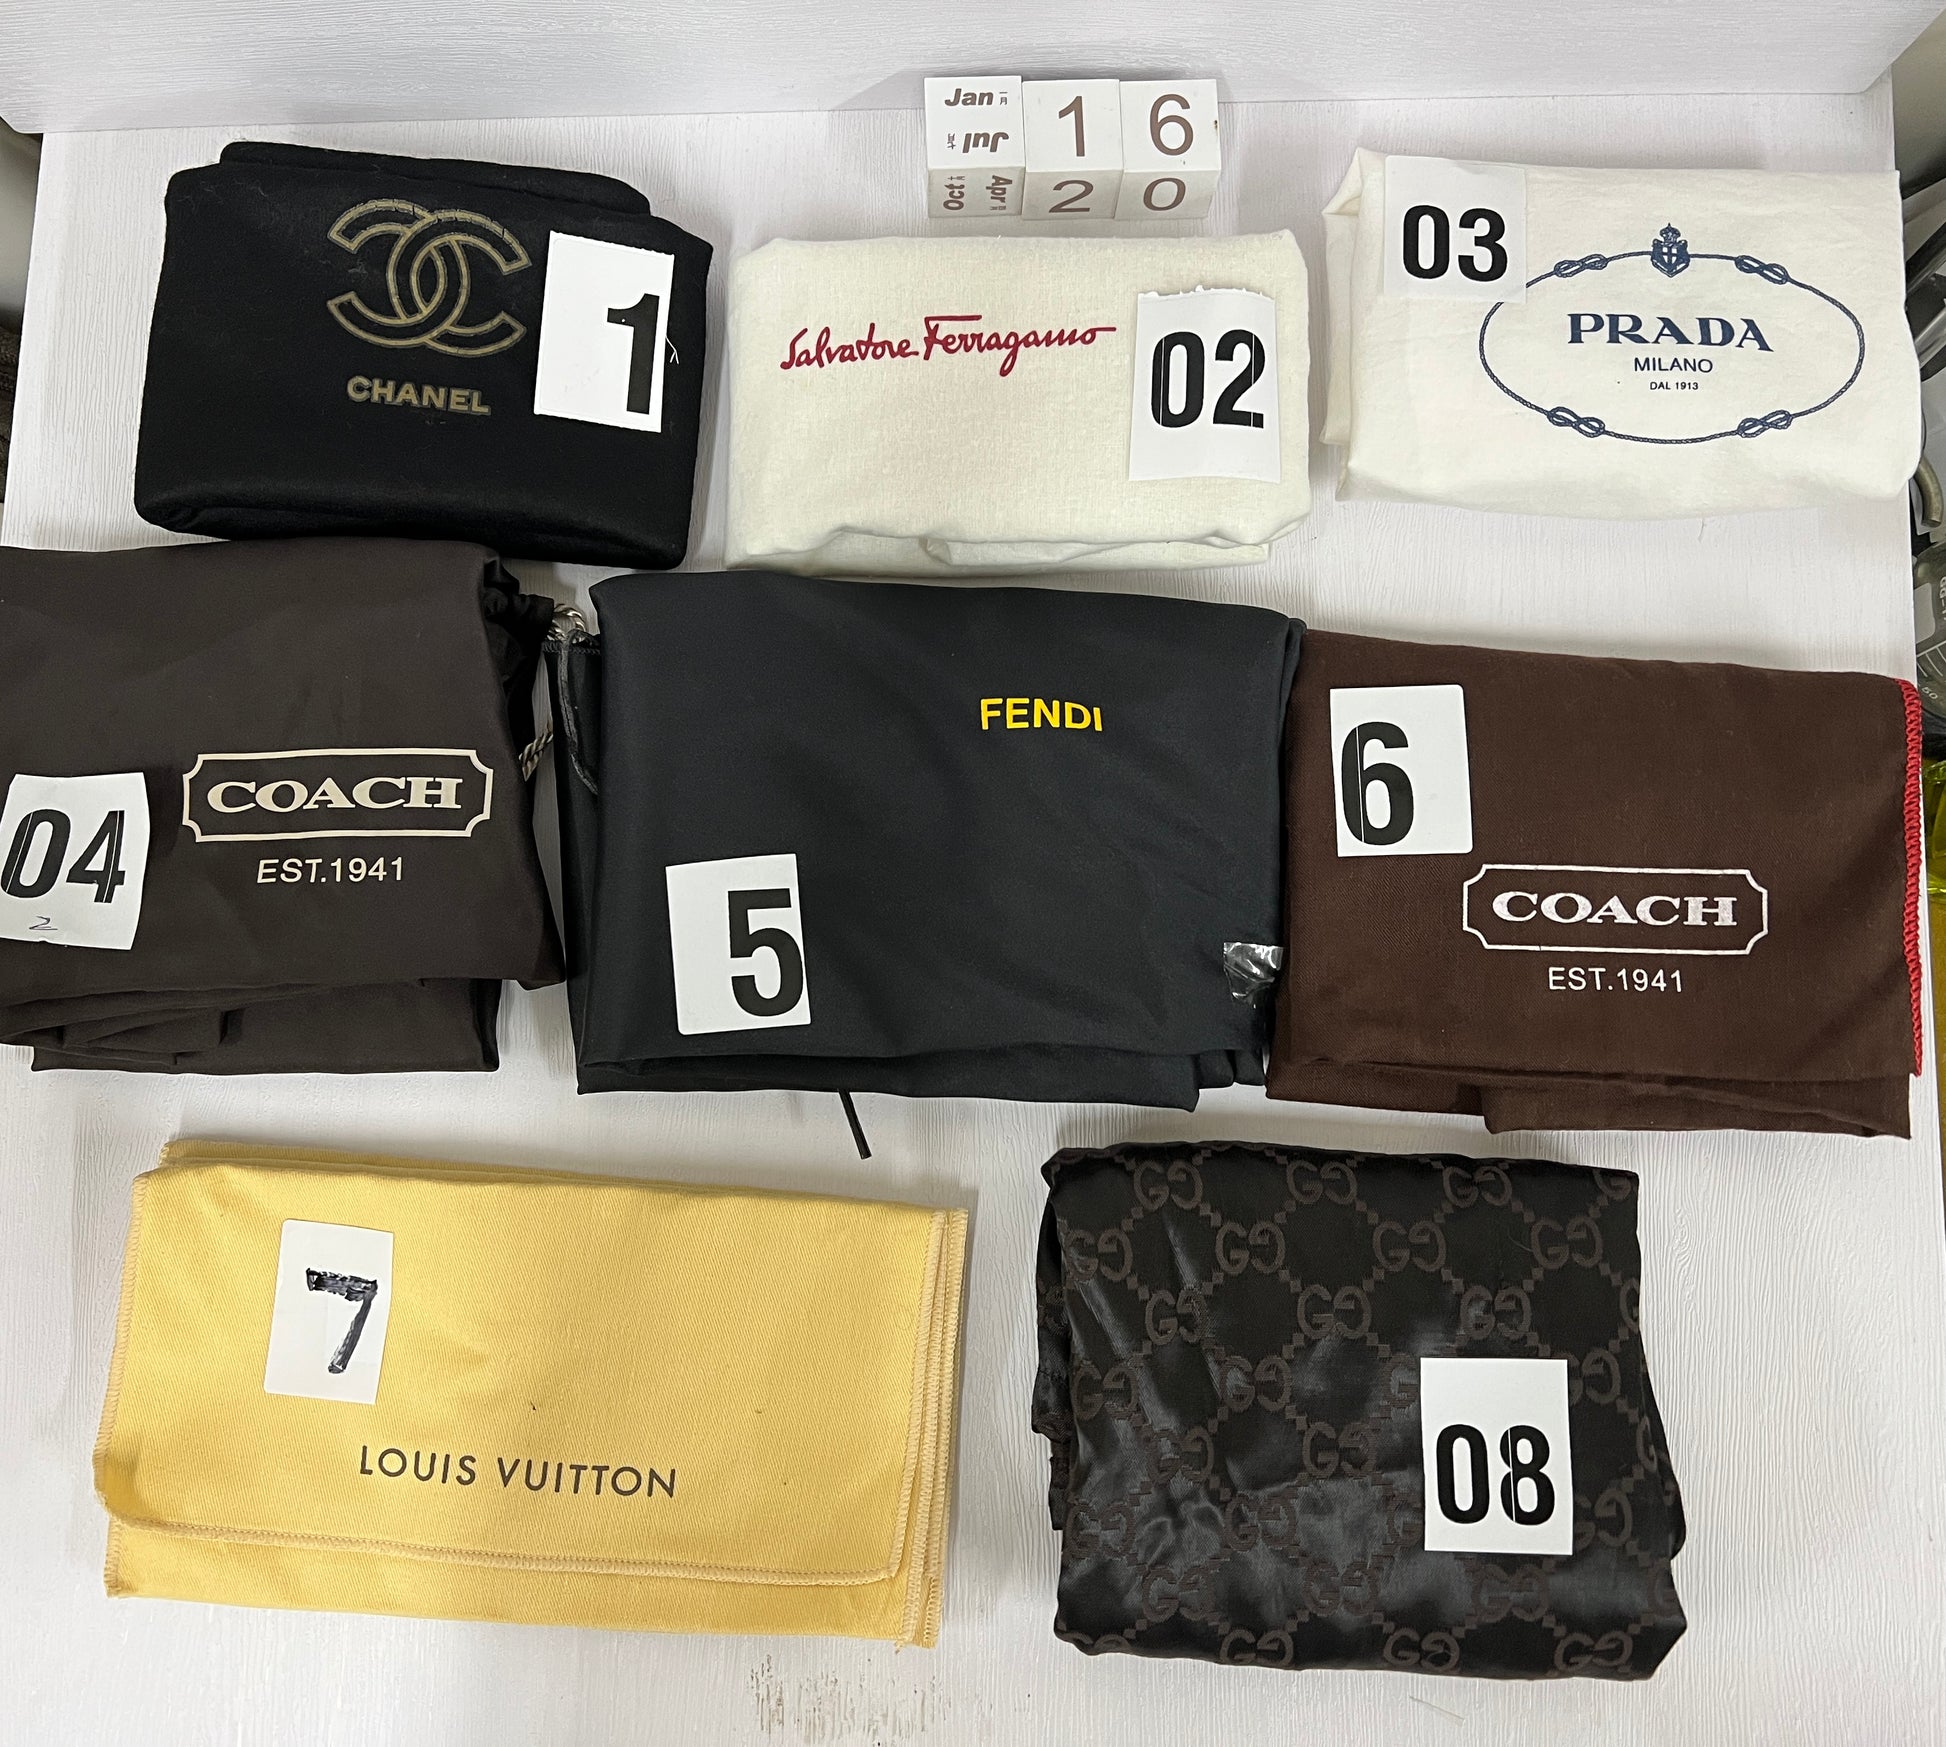 Louis,Chanel, Coach, Prada, Gucci, Salvatore dust bag for wallet